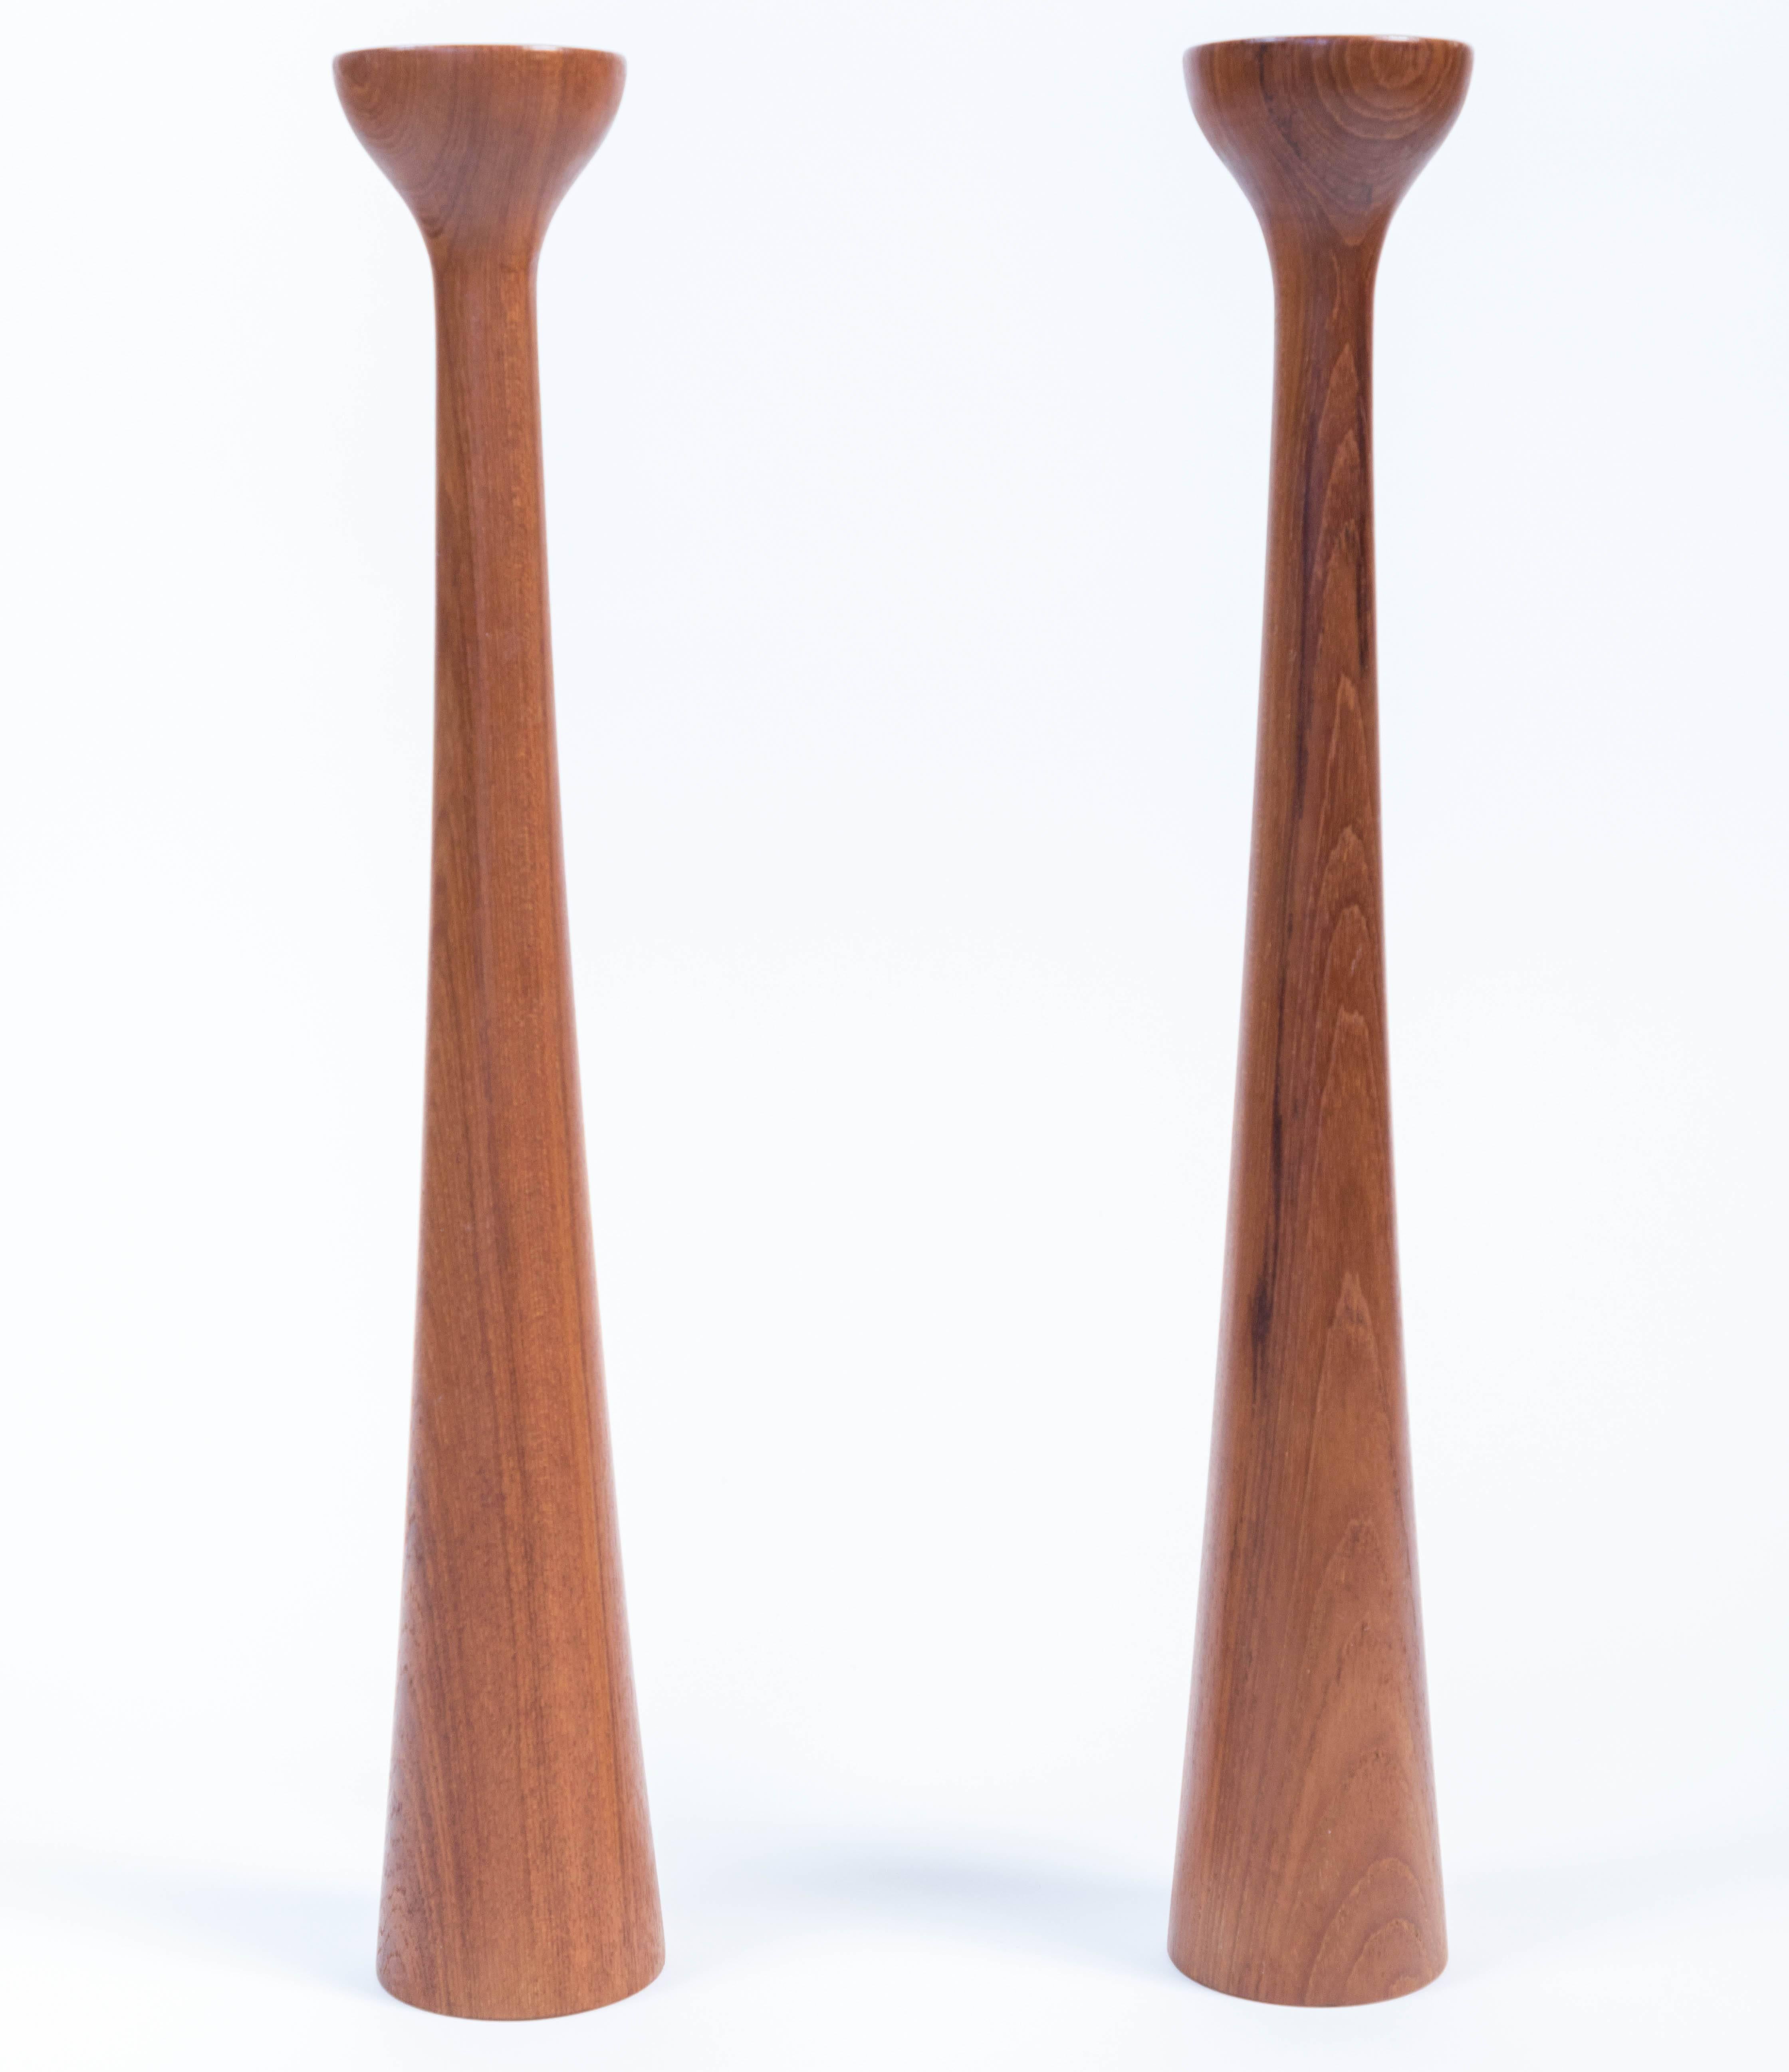 Pair of midcentury tall teak candlesticks from H + F Denmark.